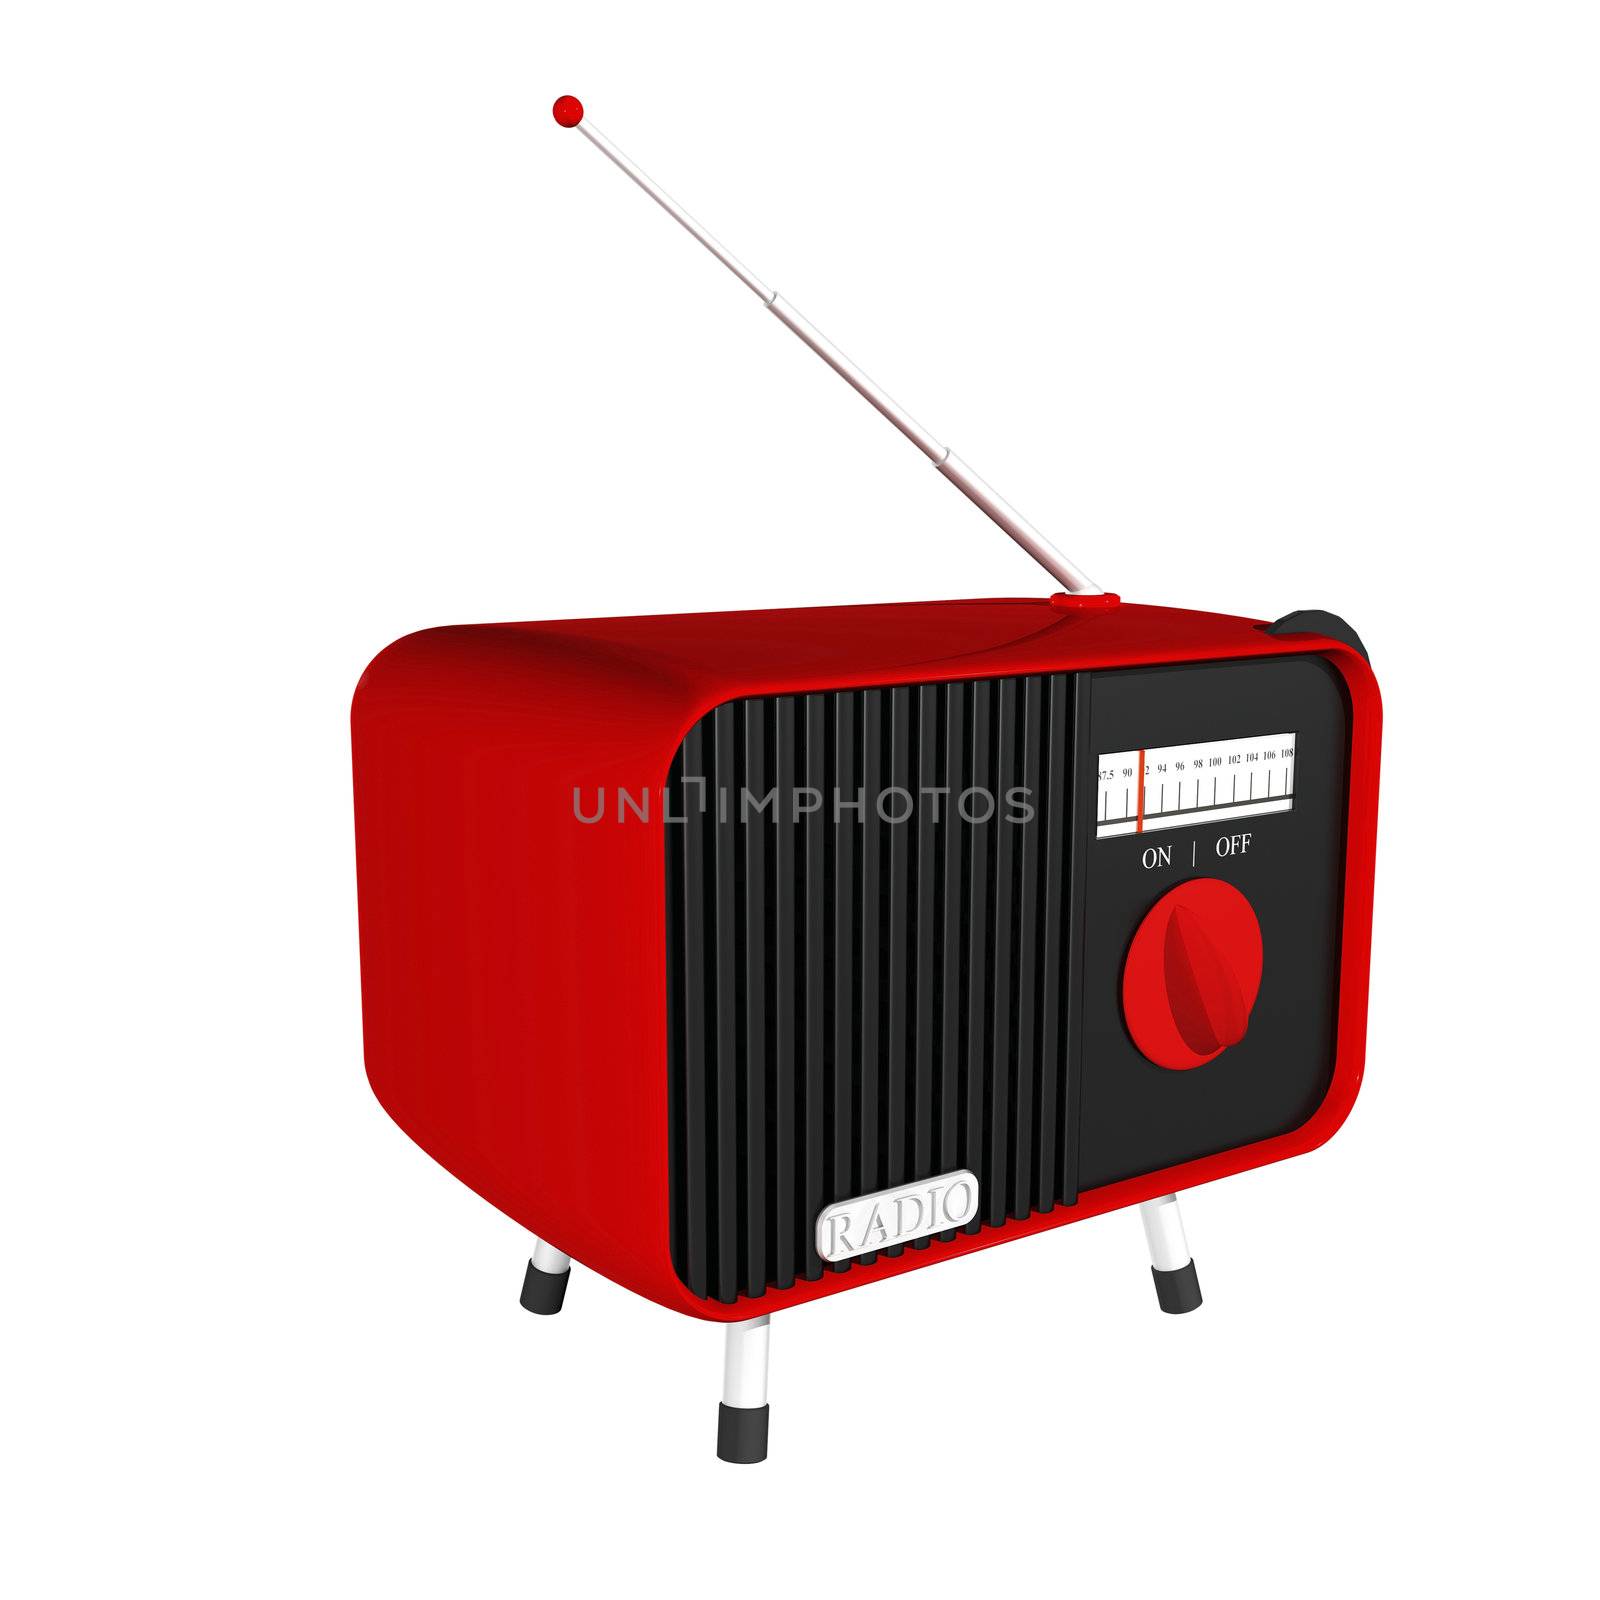 Retro radio by magraphics